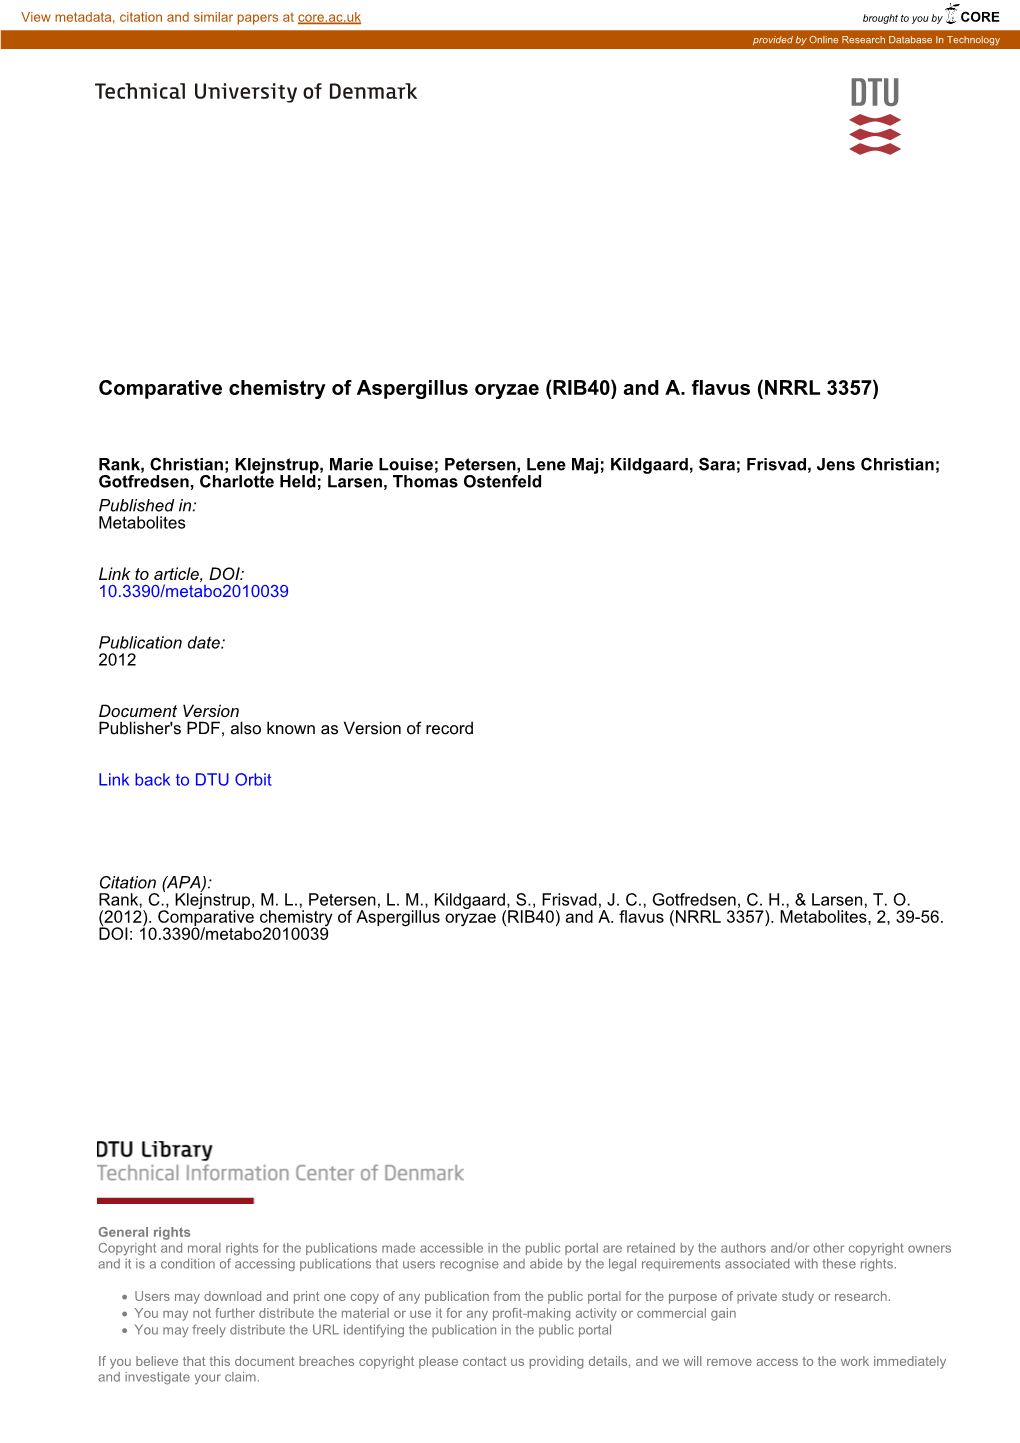 Comparative Chemistry of Aspergillus Oryzae (RIB40) and A